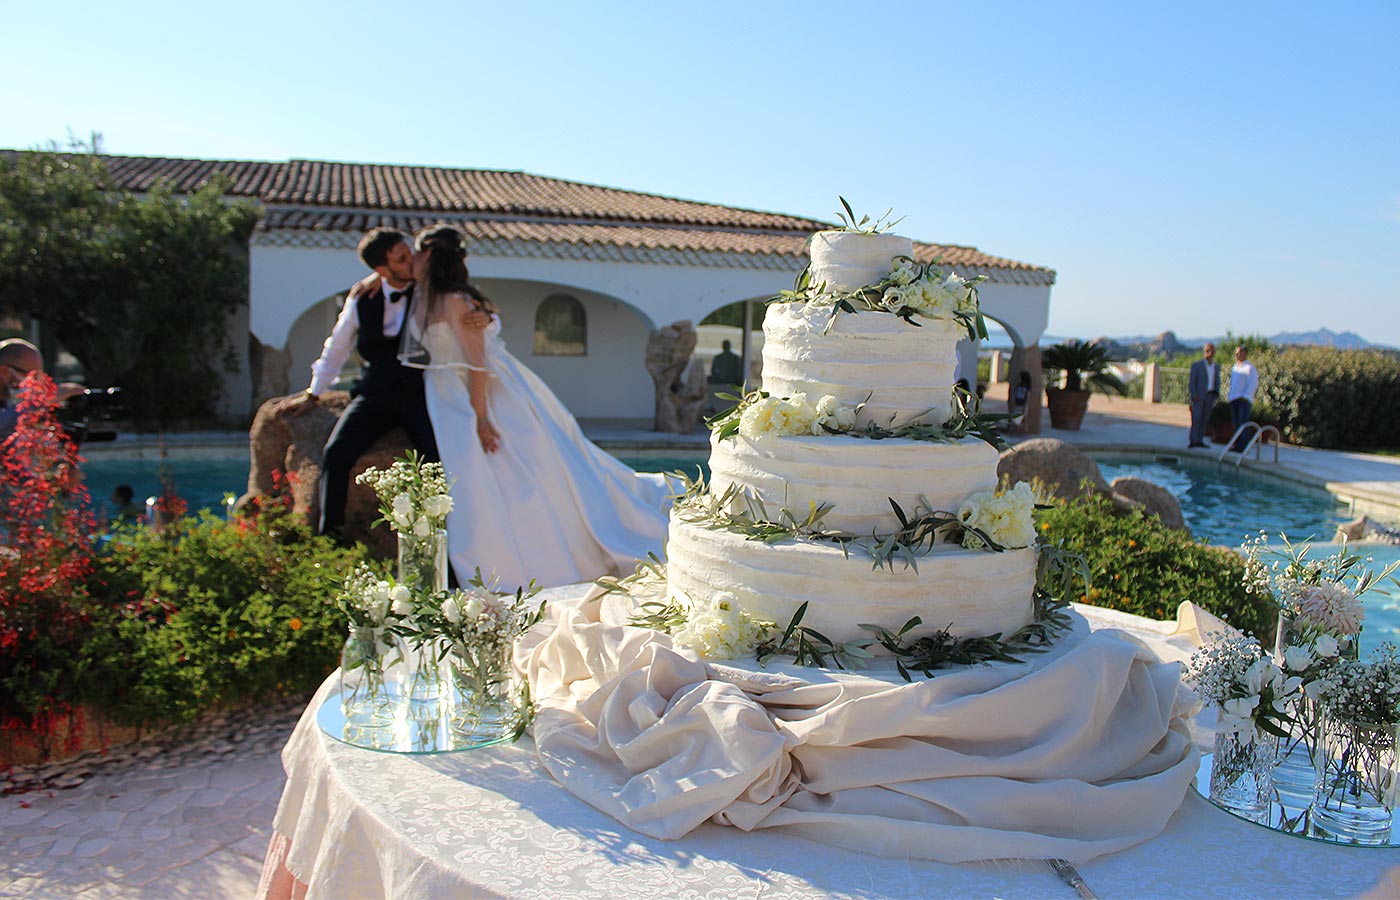 newlyweds kiss each other near the wedding cake at Hotel Pulicinu, wedding location in Sardinia